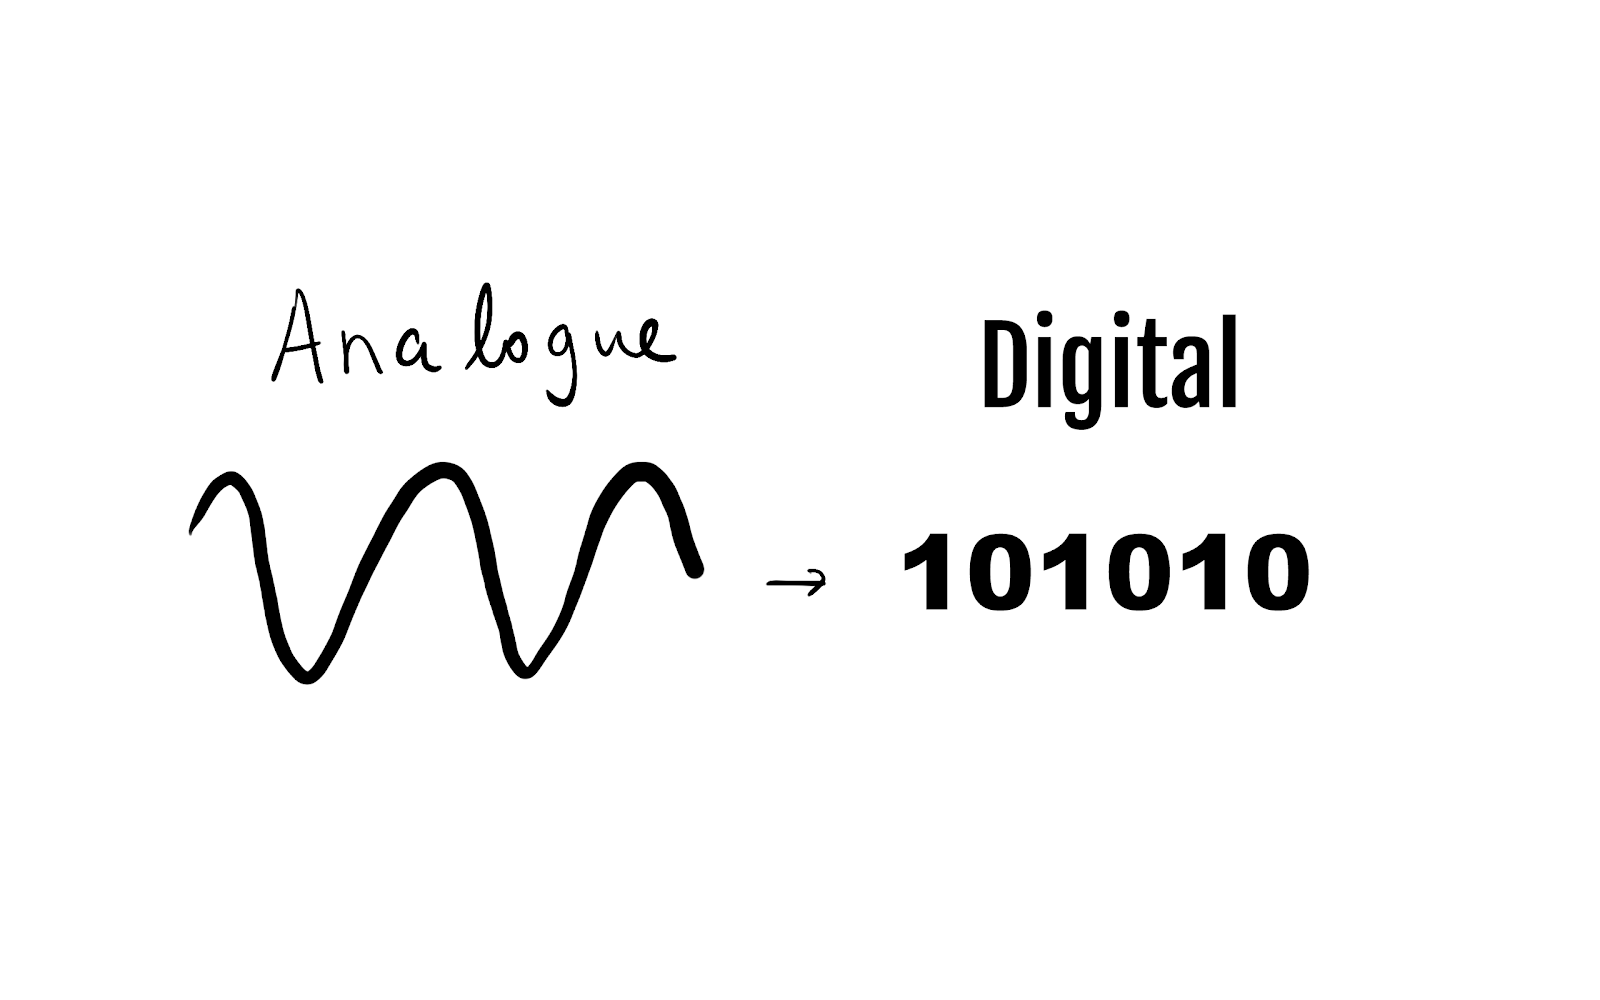 Analogue to digital sound conversion